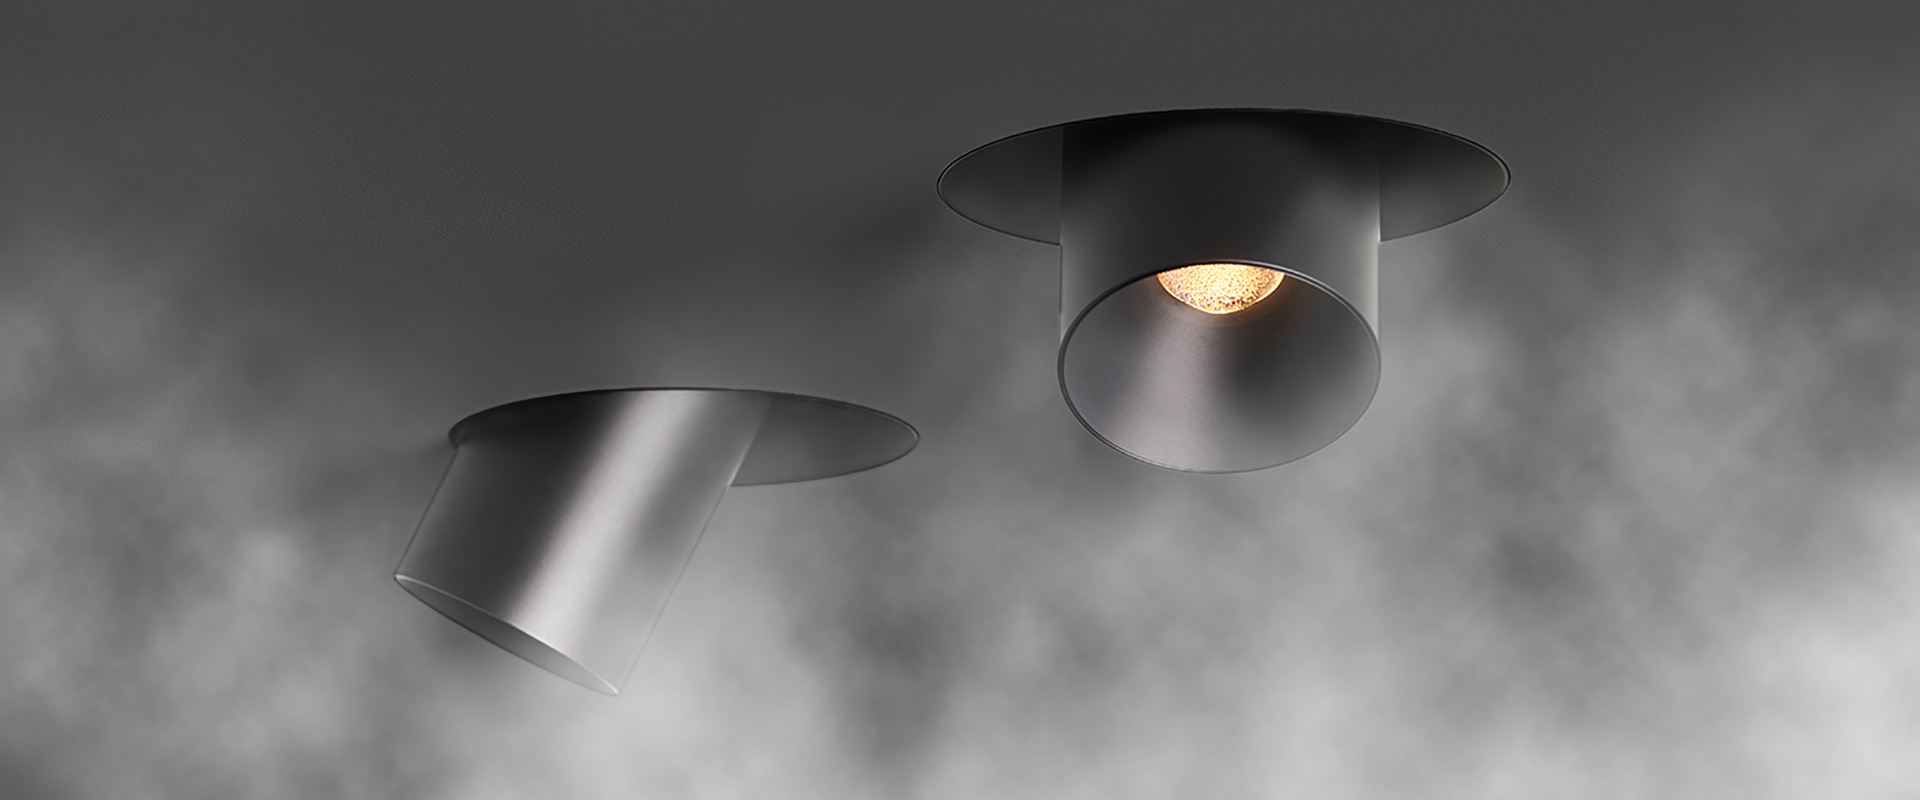 Pair of prado Light + Ventilation trimless downlights extracting steam 